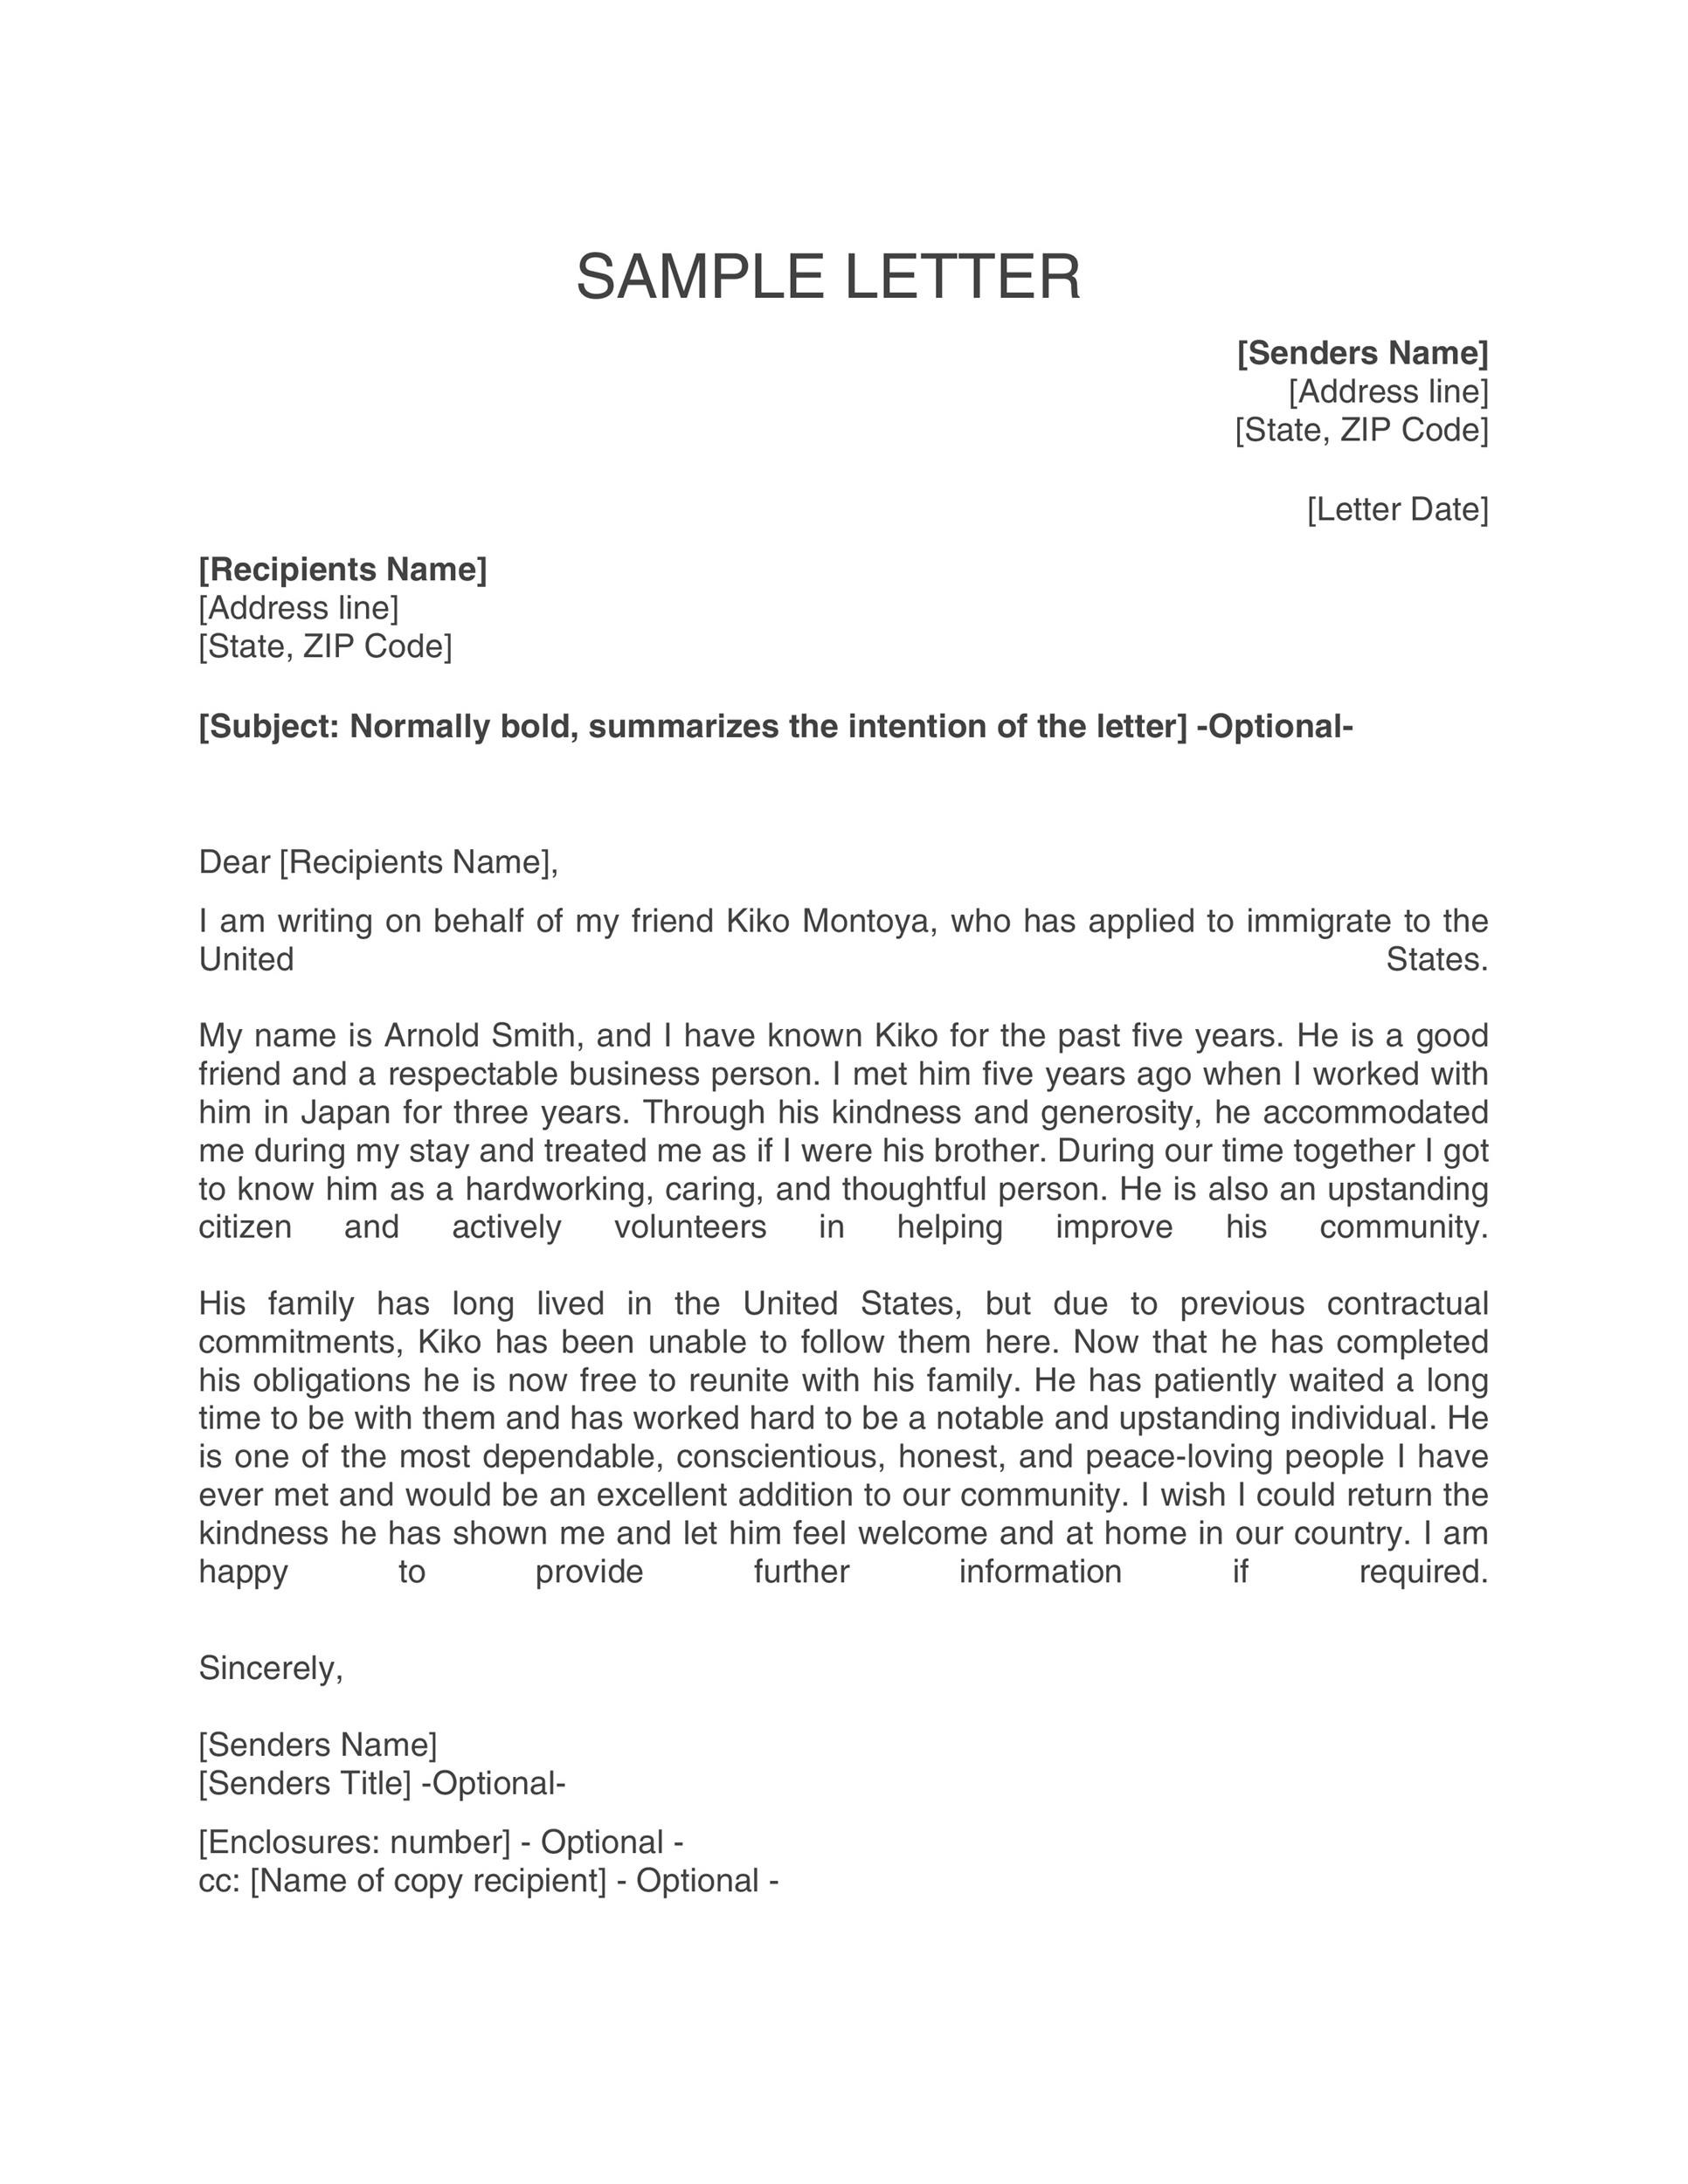 Immigration officer cover letter sample August 28